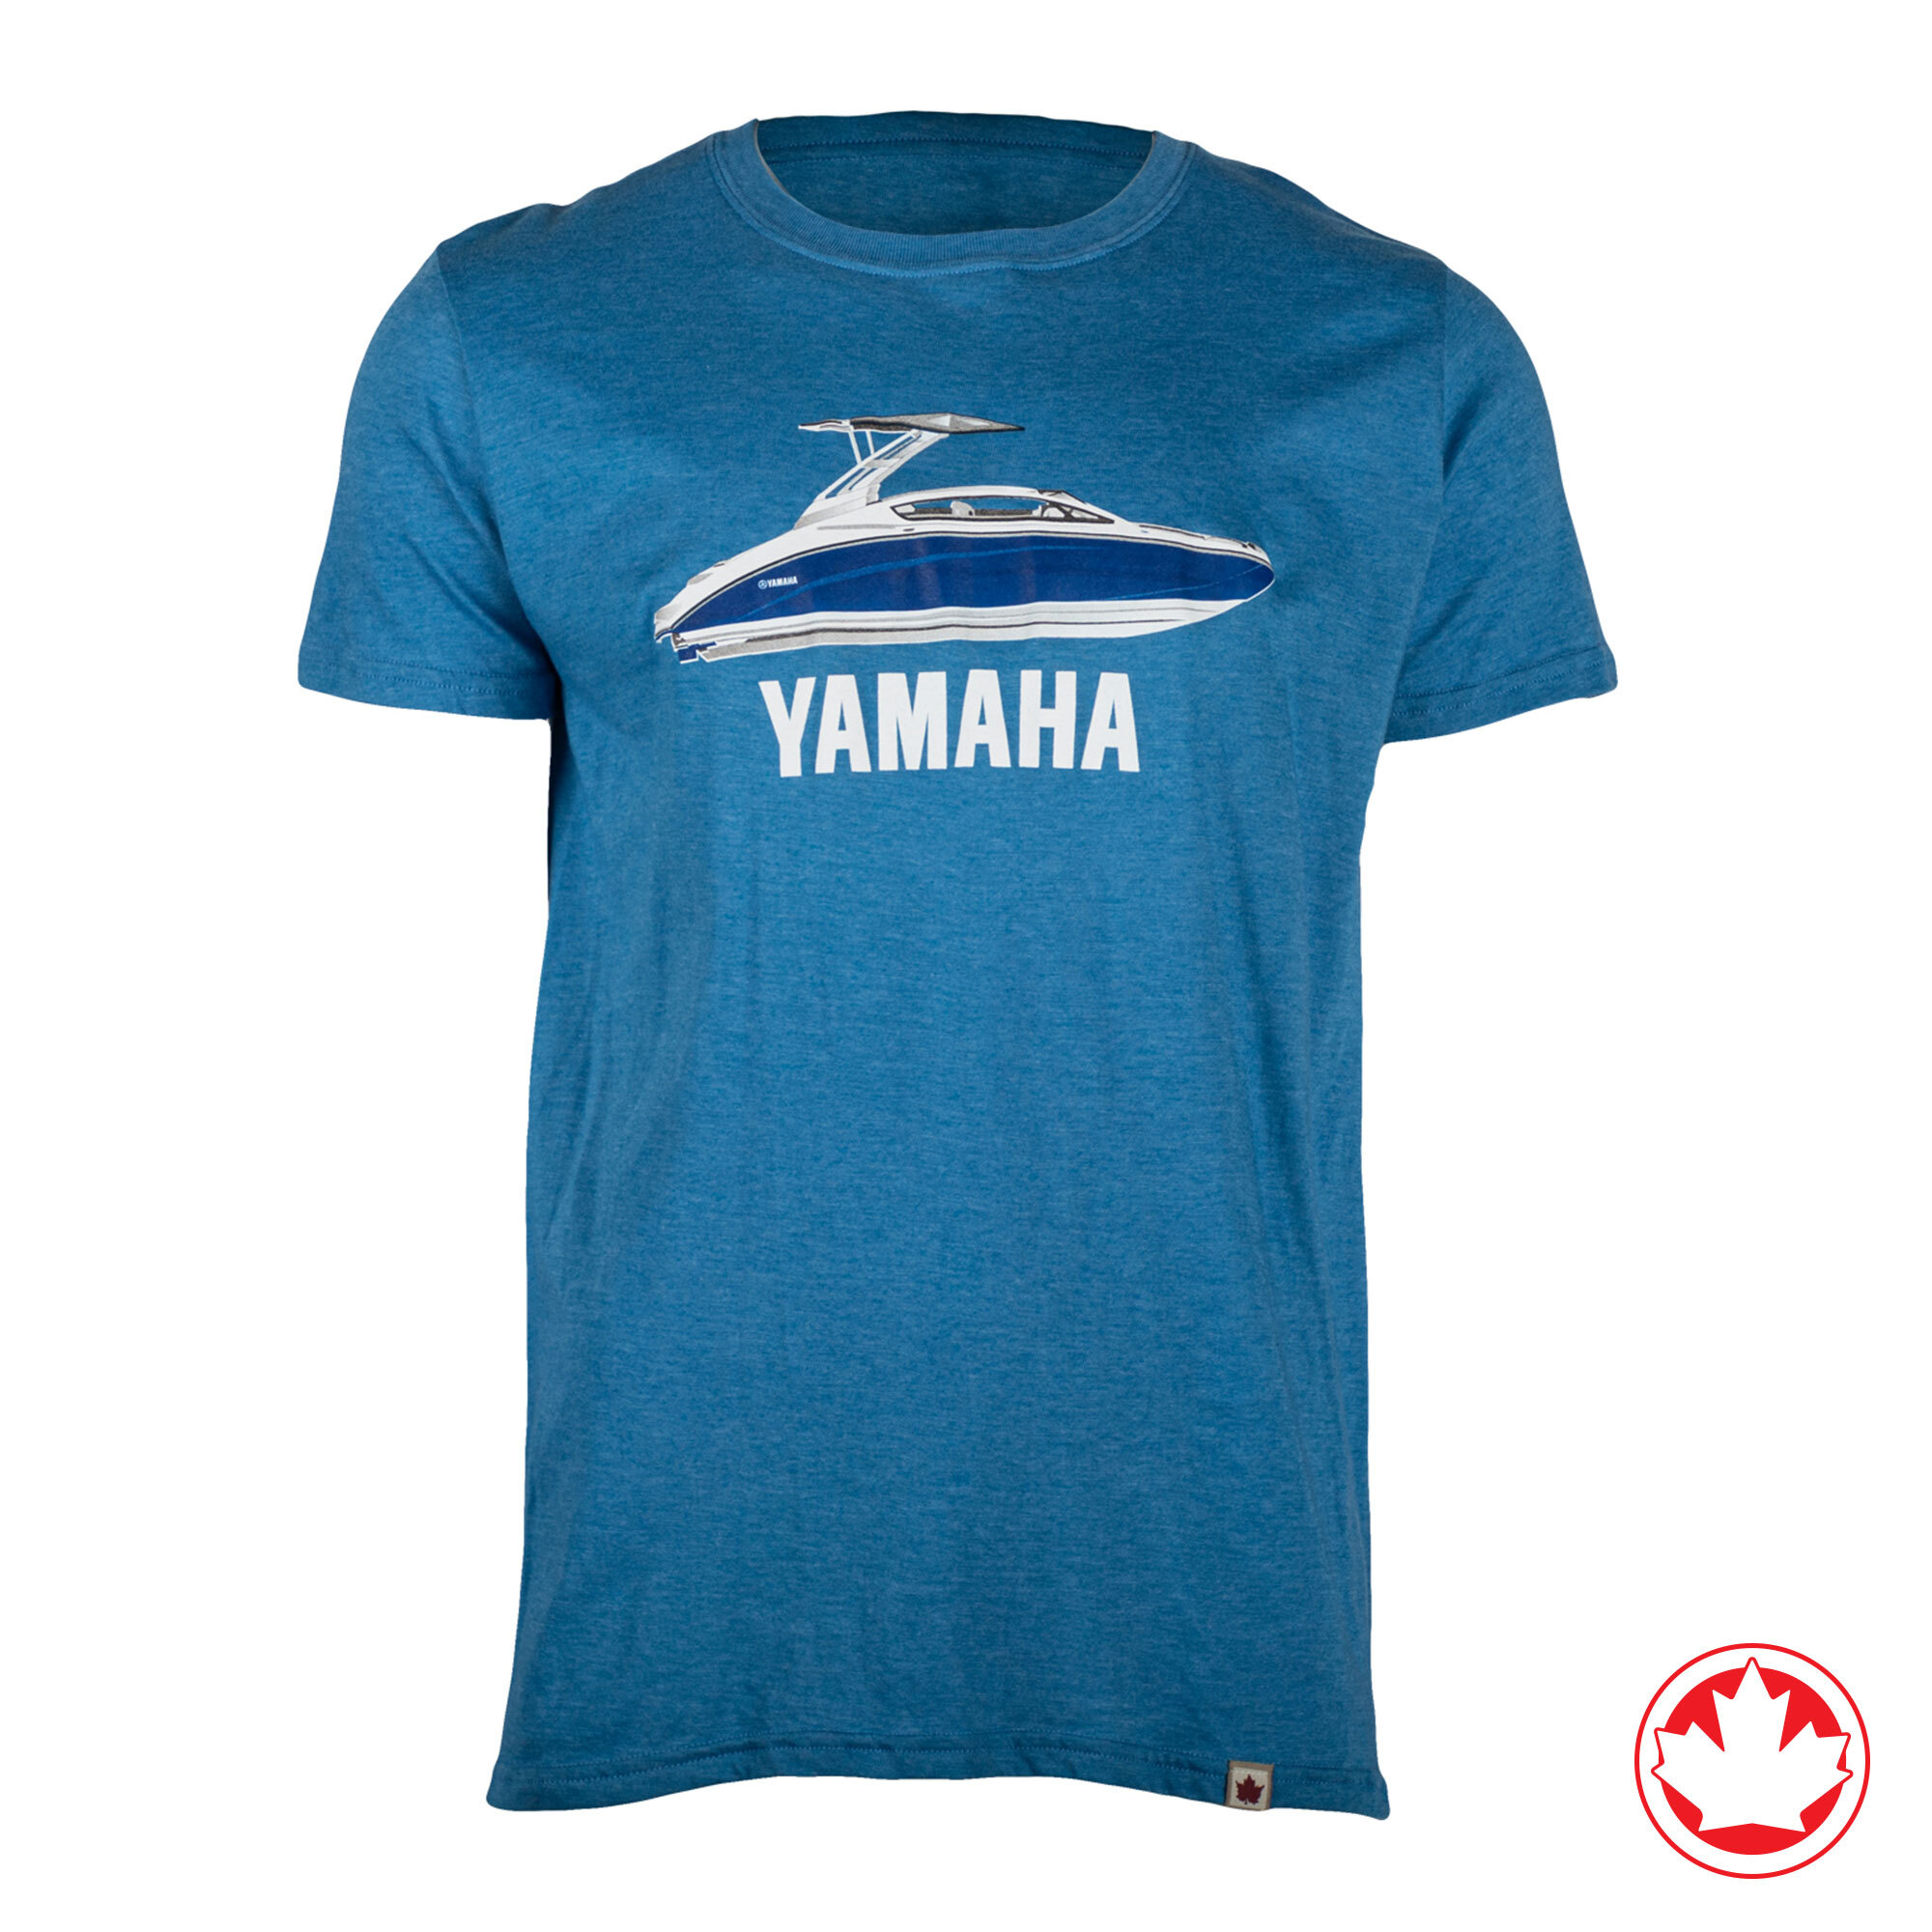 Yamaha Making Waves Tshirt Medium blue